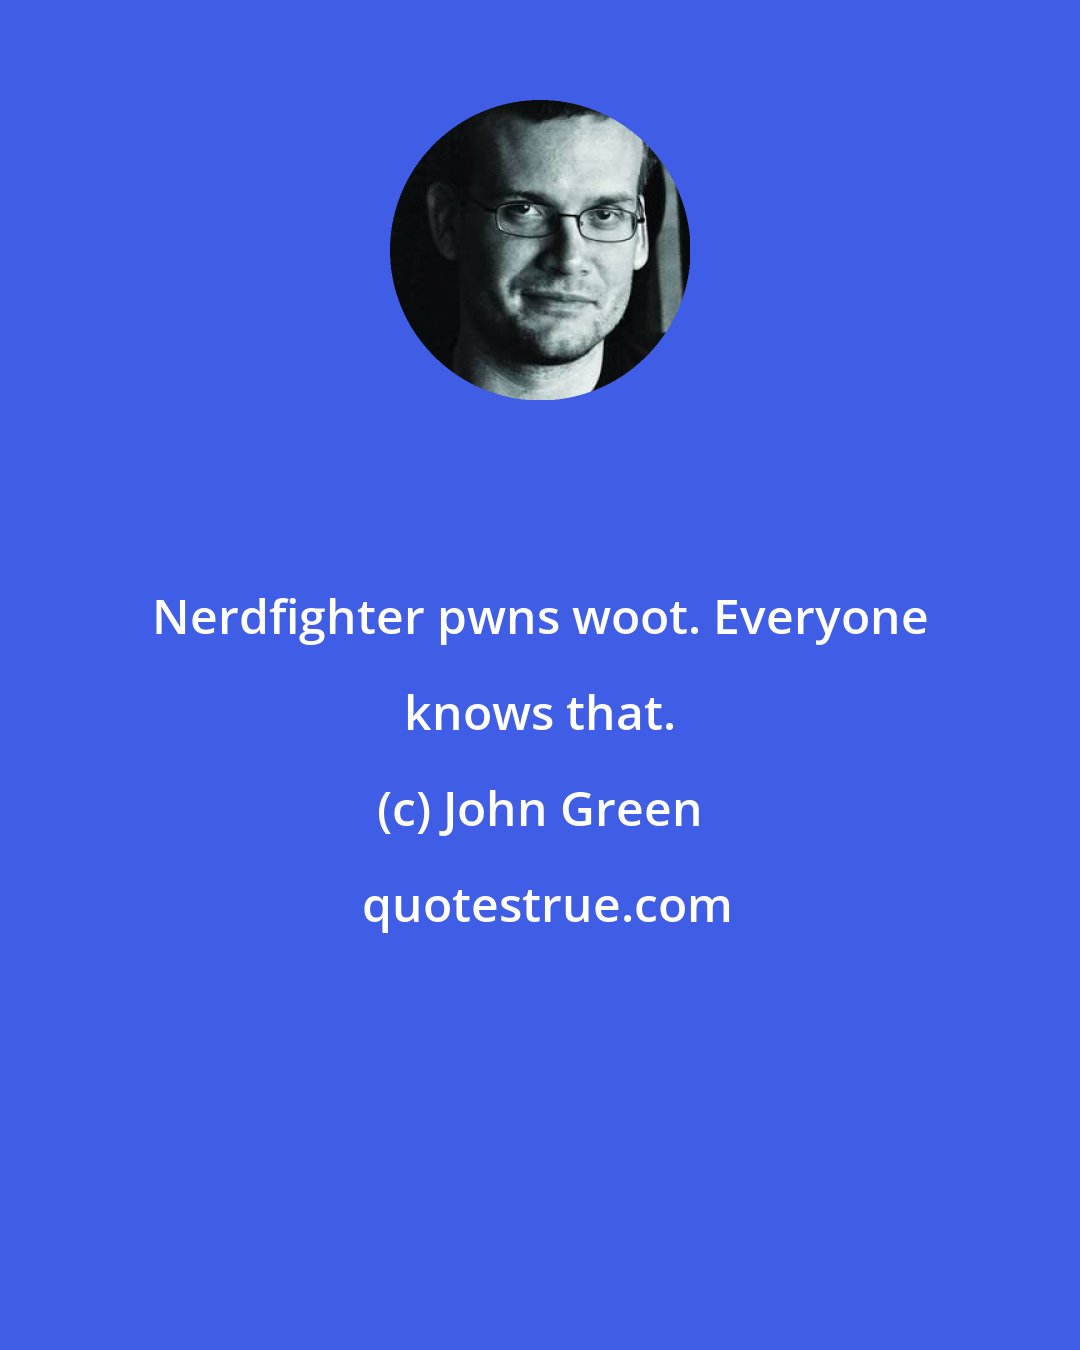 John Green: Nerdfighter pwns woot. Everyone knows that.